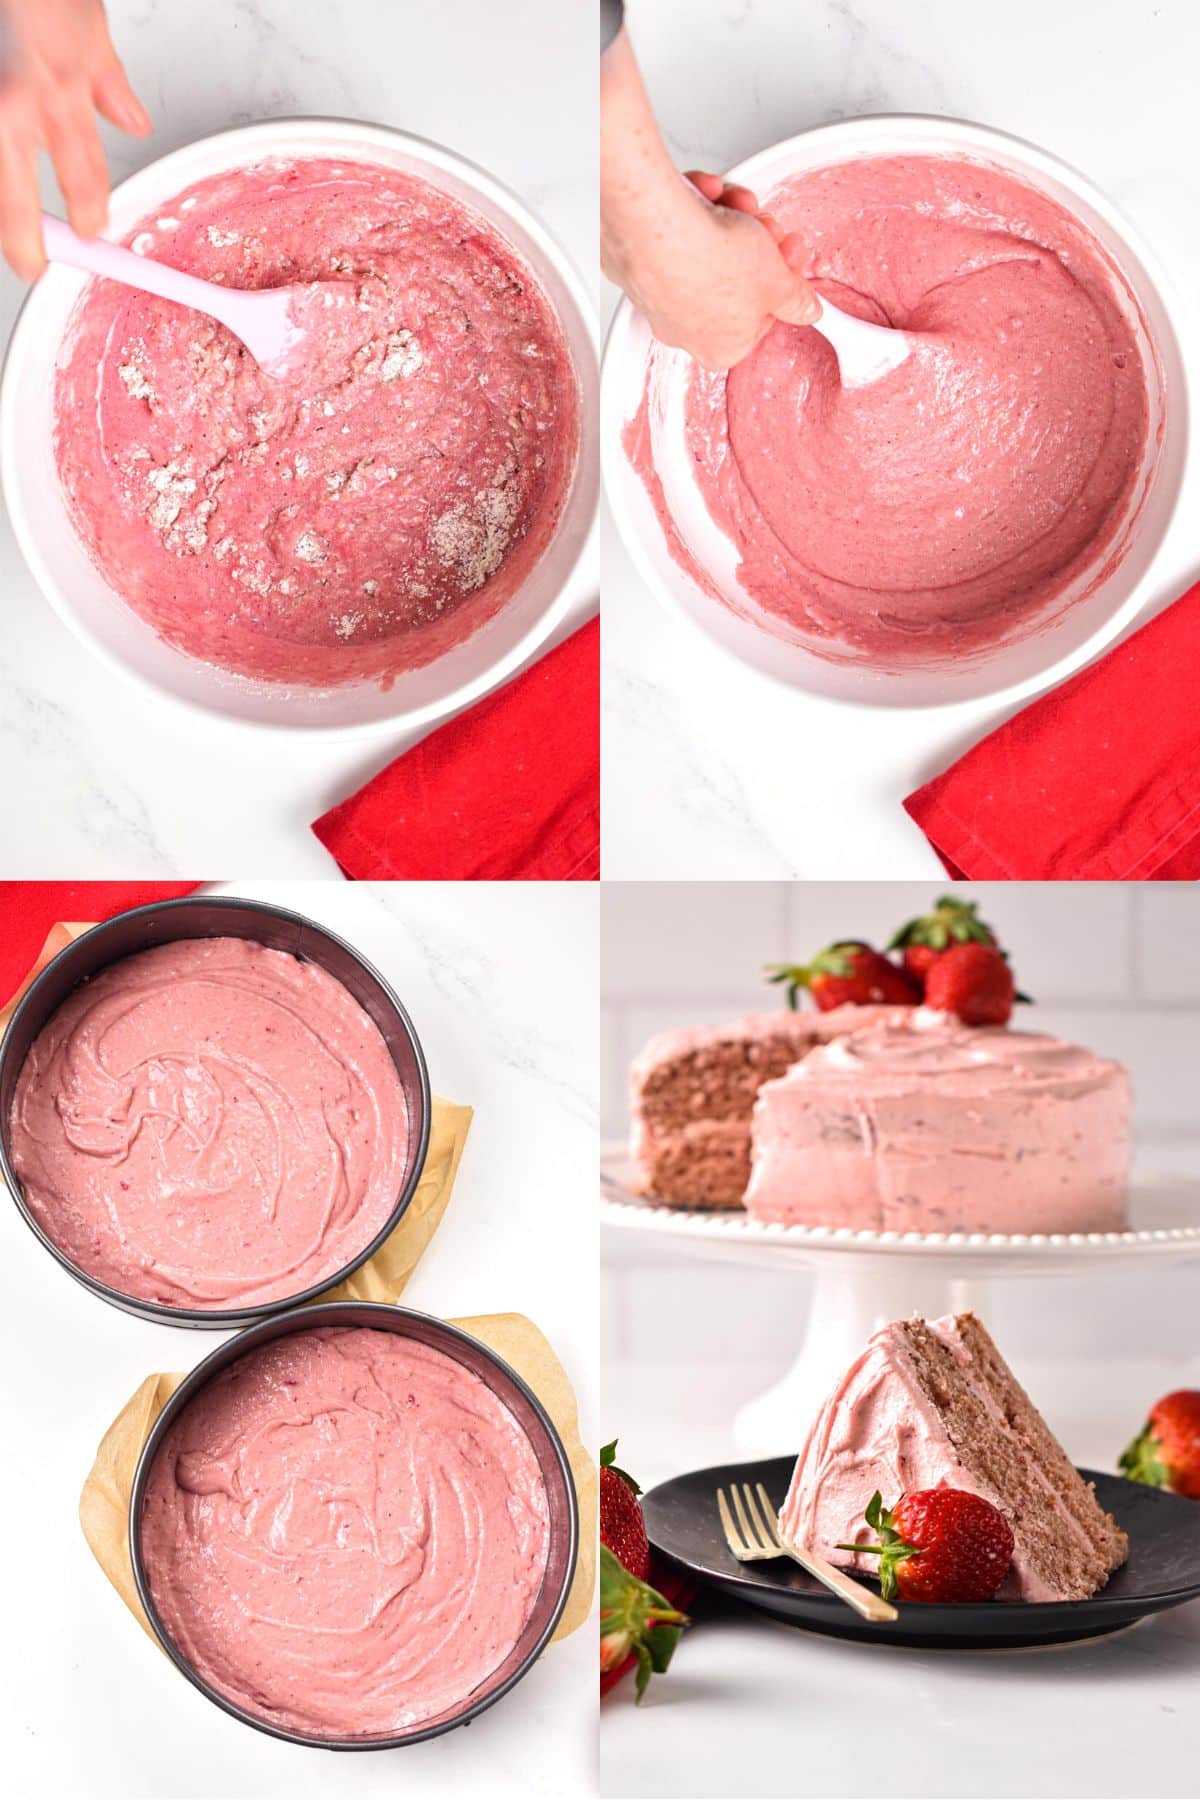 How to make Vegan Strawberry Cake